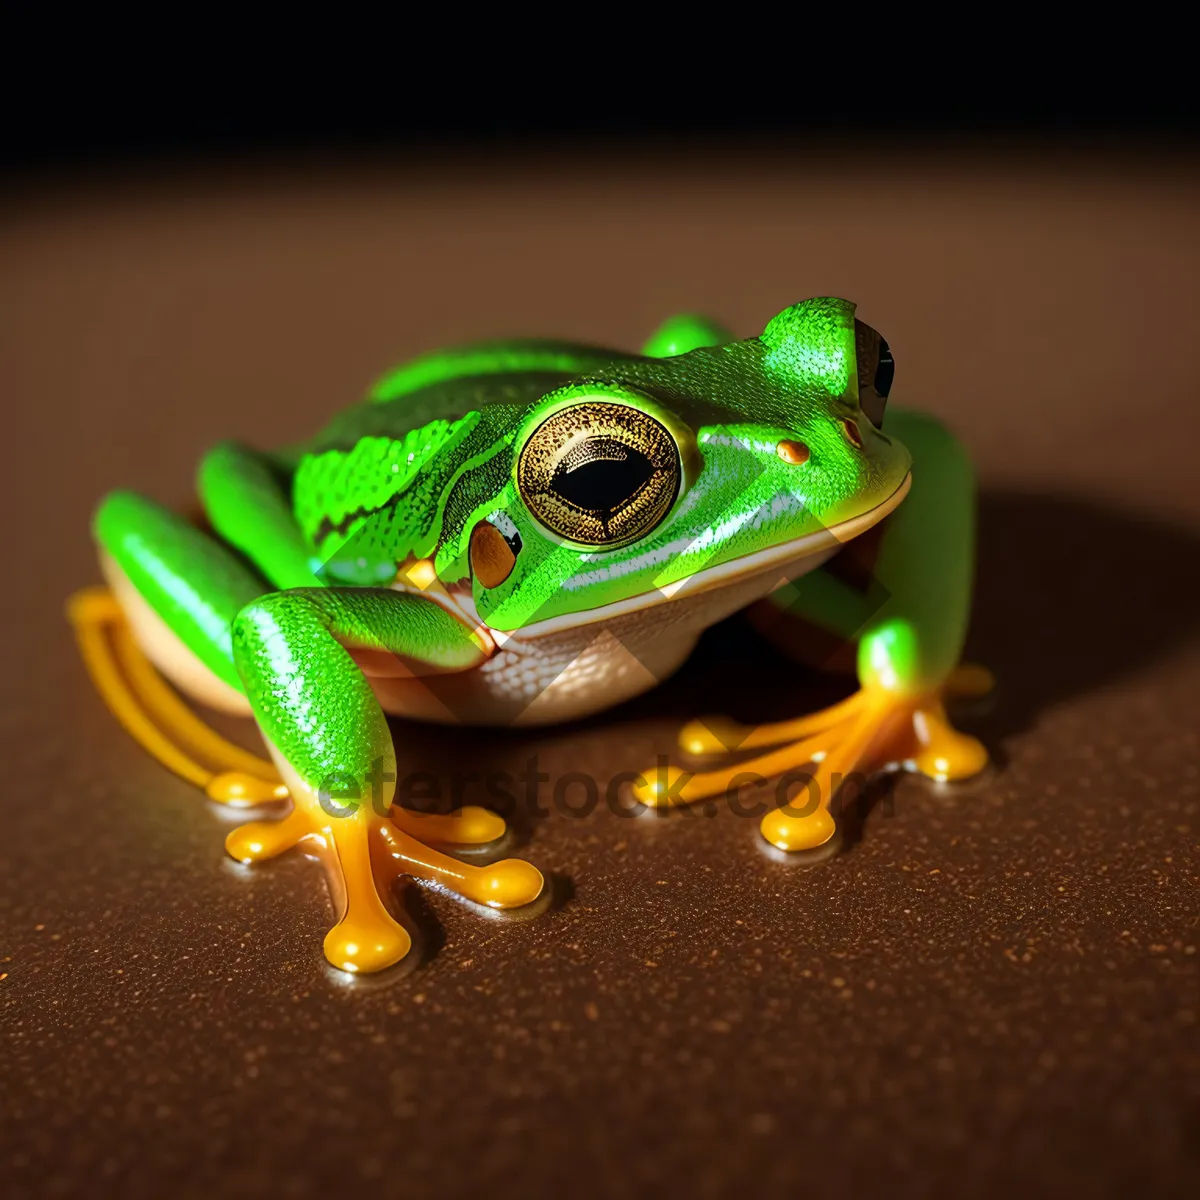 Picture of Vibrant Eyed Leaf Frog Peeking Through Greenery